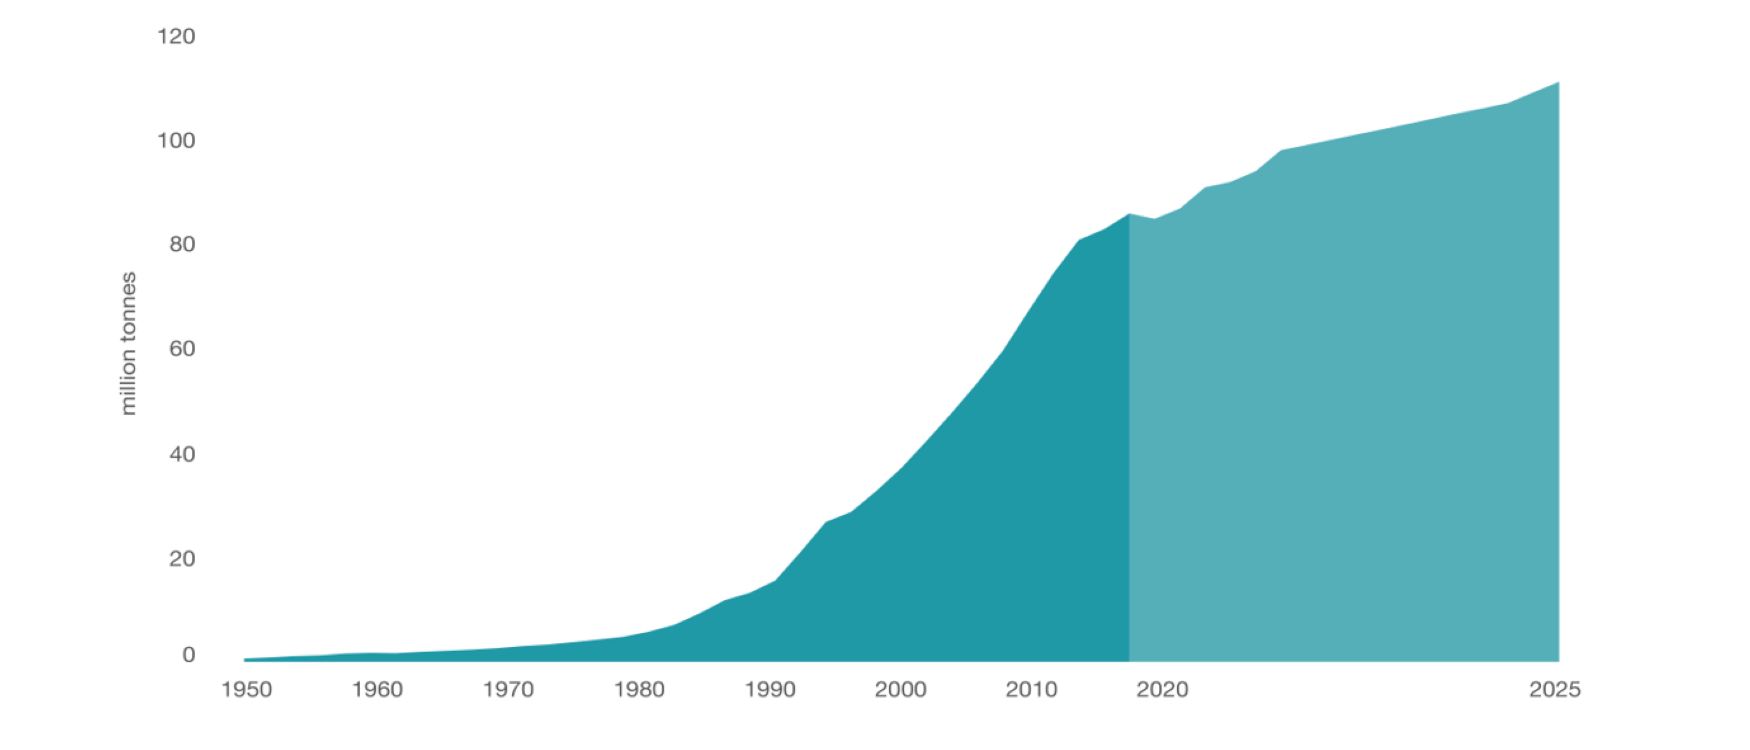 Estimated production graph